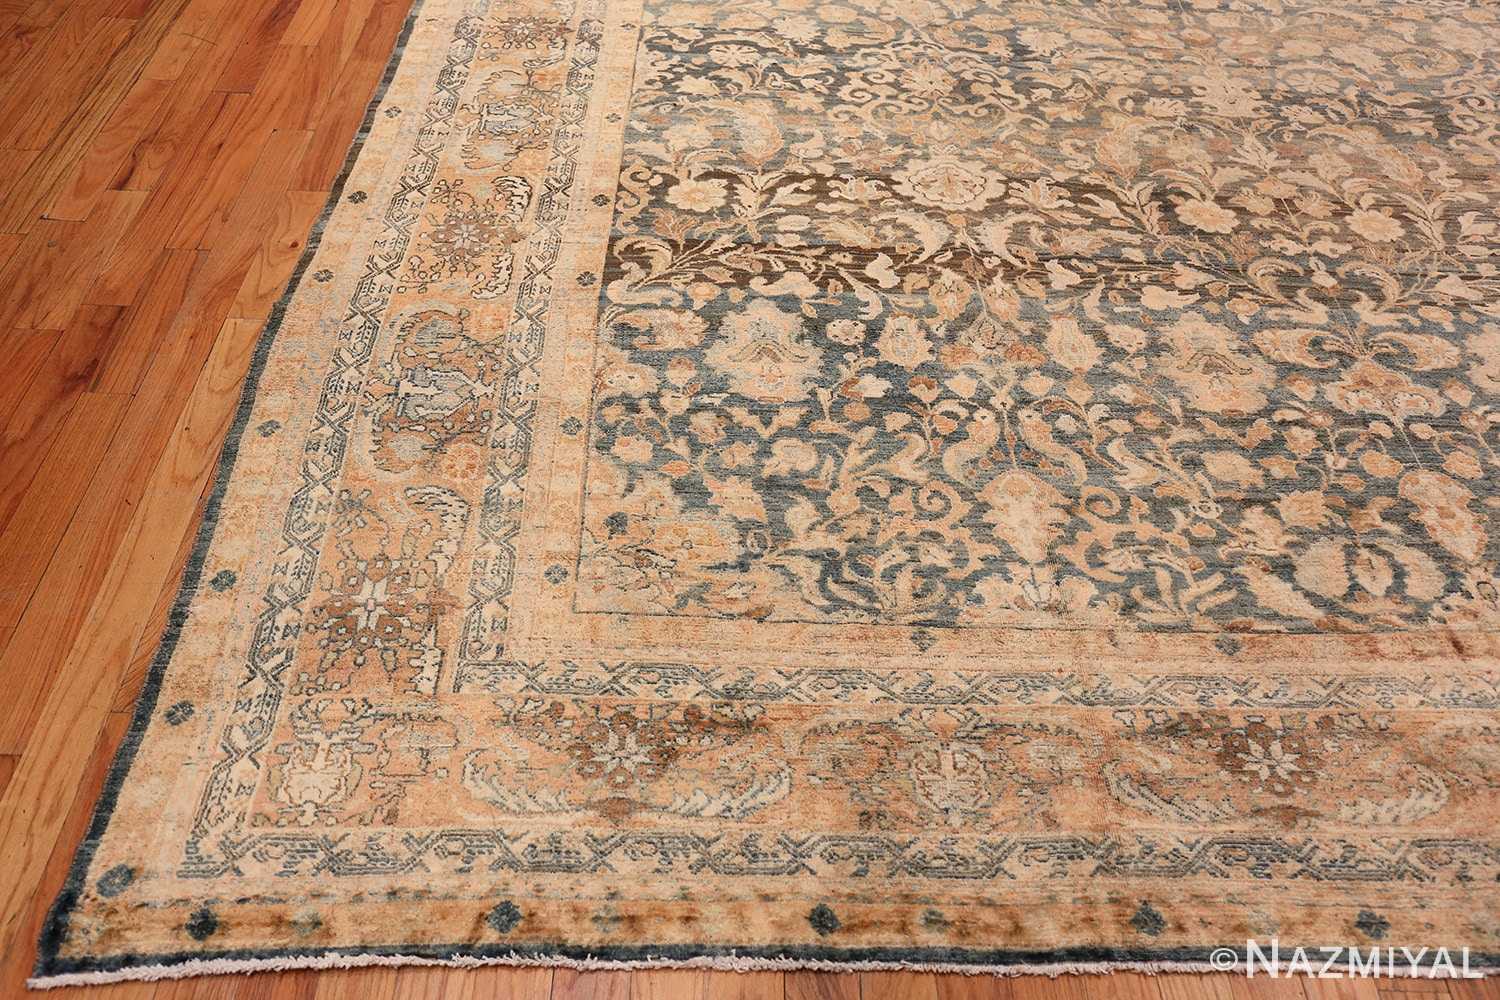 Corner Large decorative Antique Persian Malayan rug 50339 by Nazmiyal